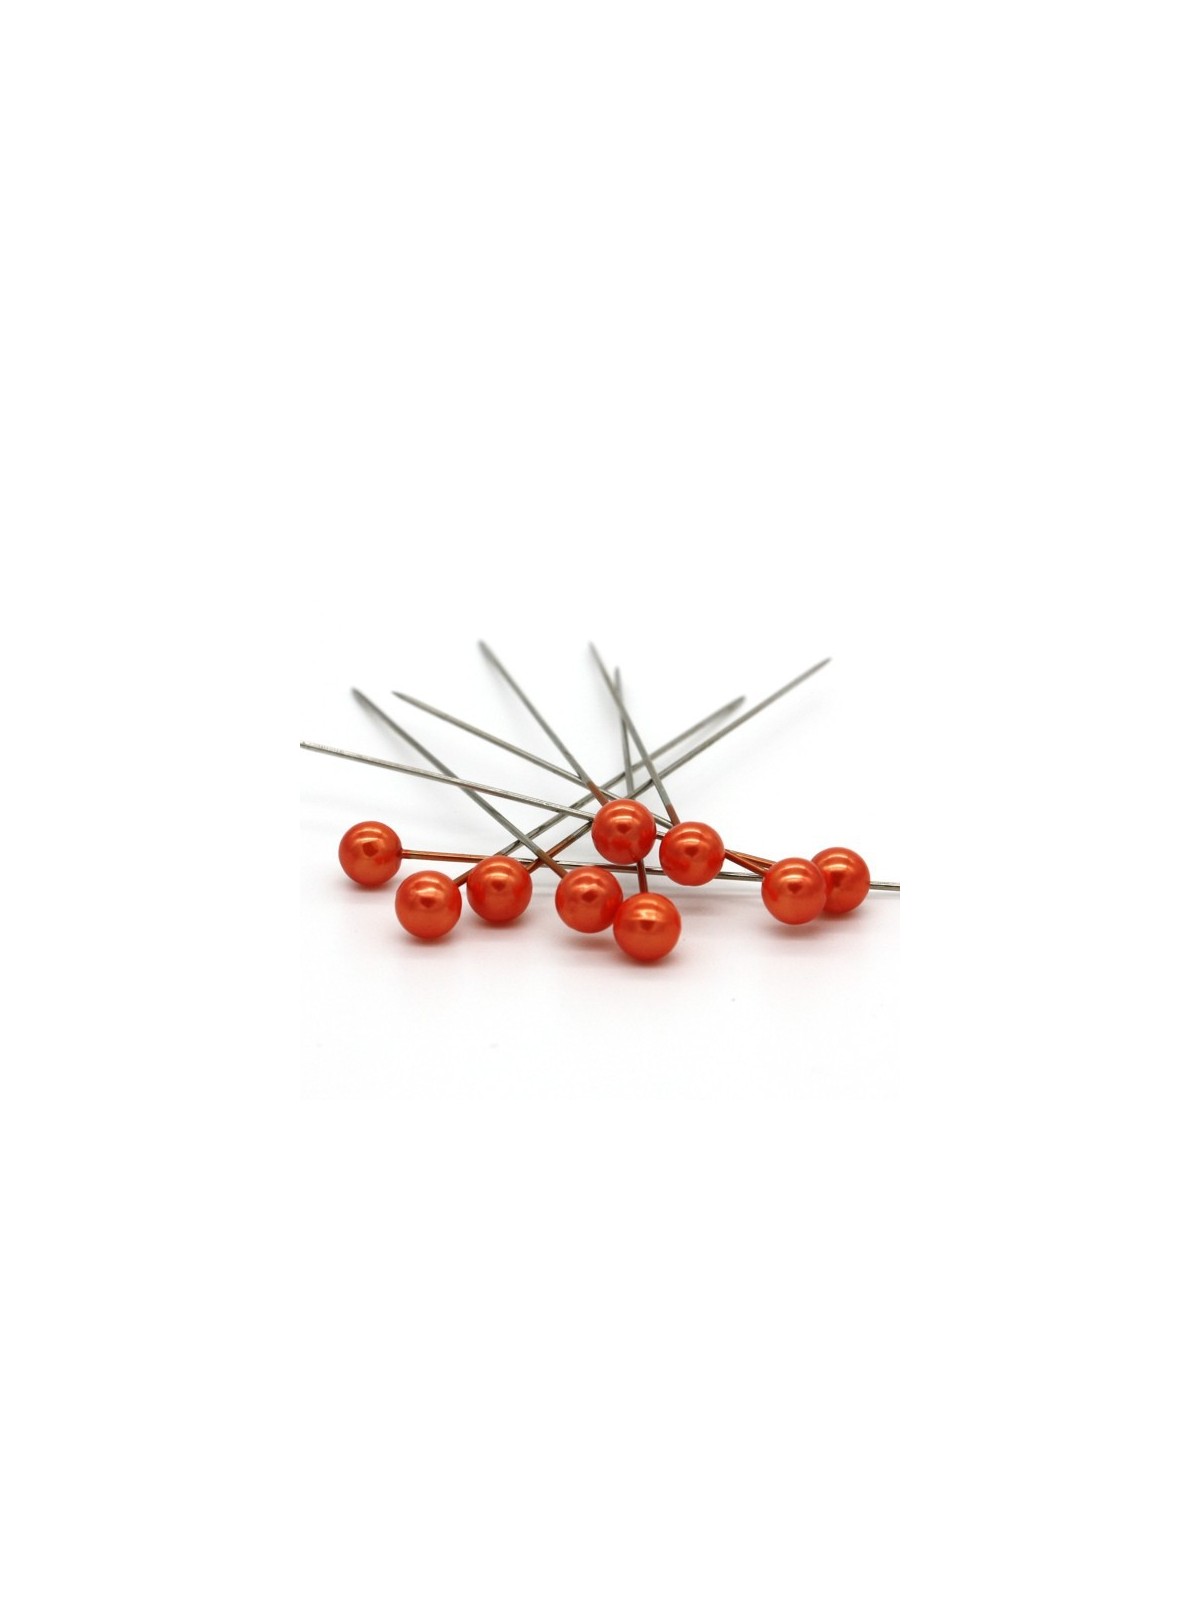 Dekorative pins - orange Perle - 65mm/9stück